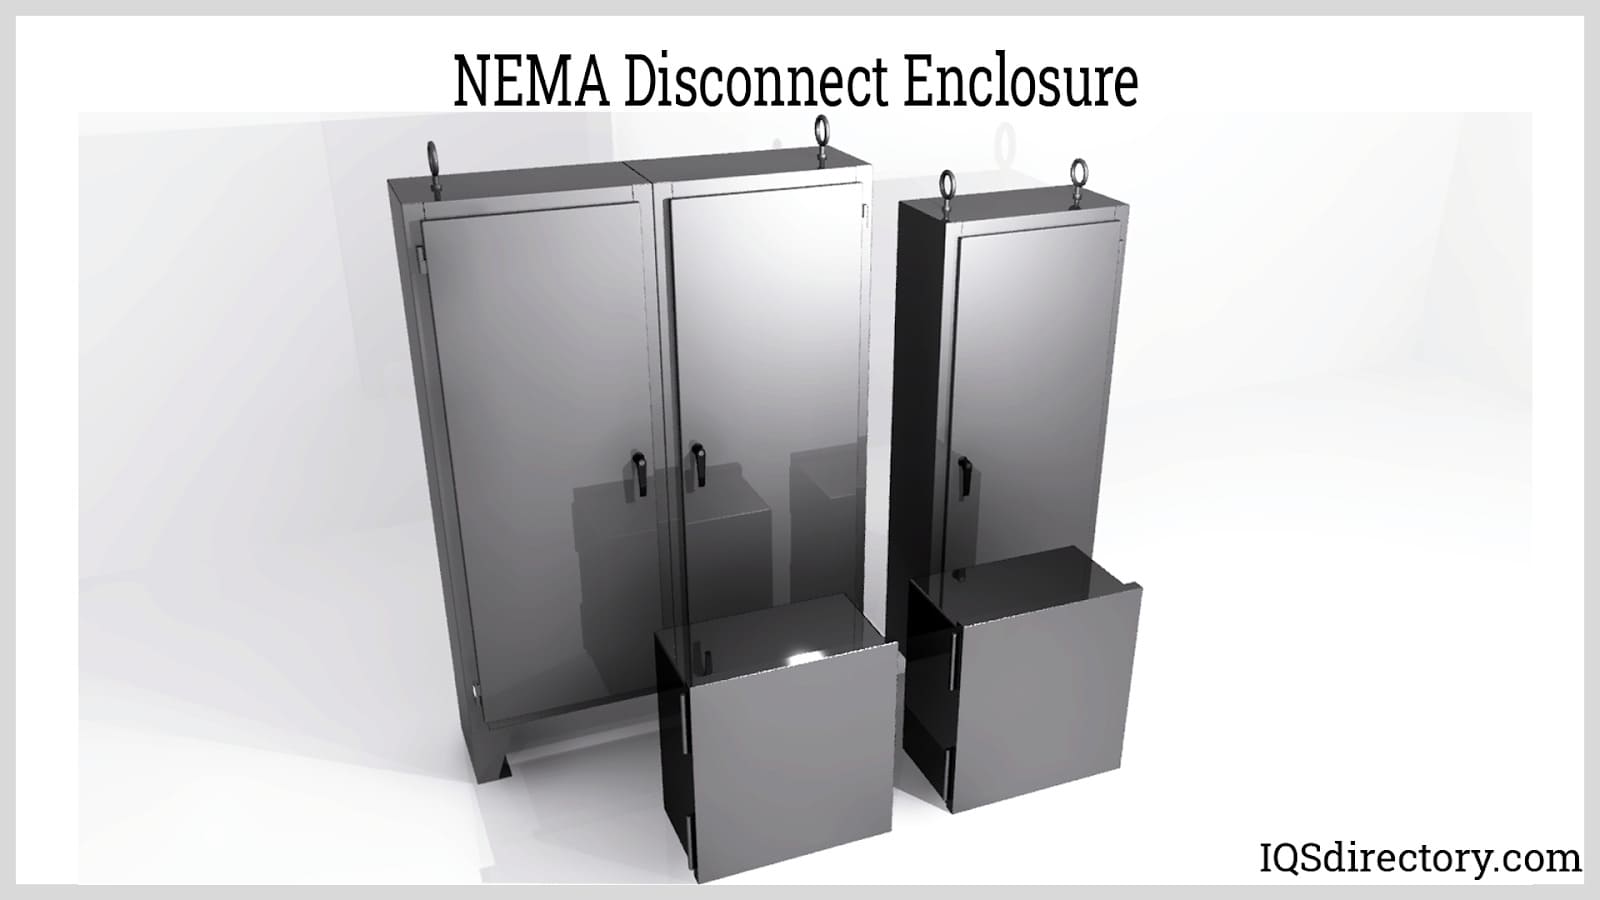 NEMA Disconnect Enclosure